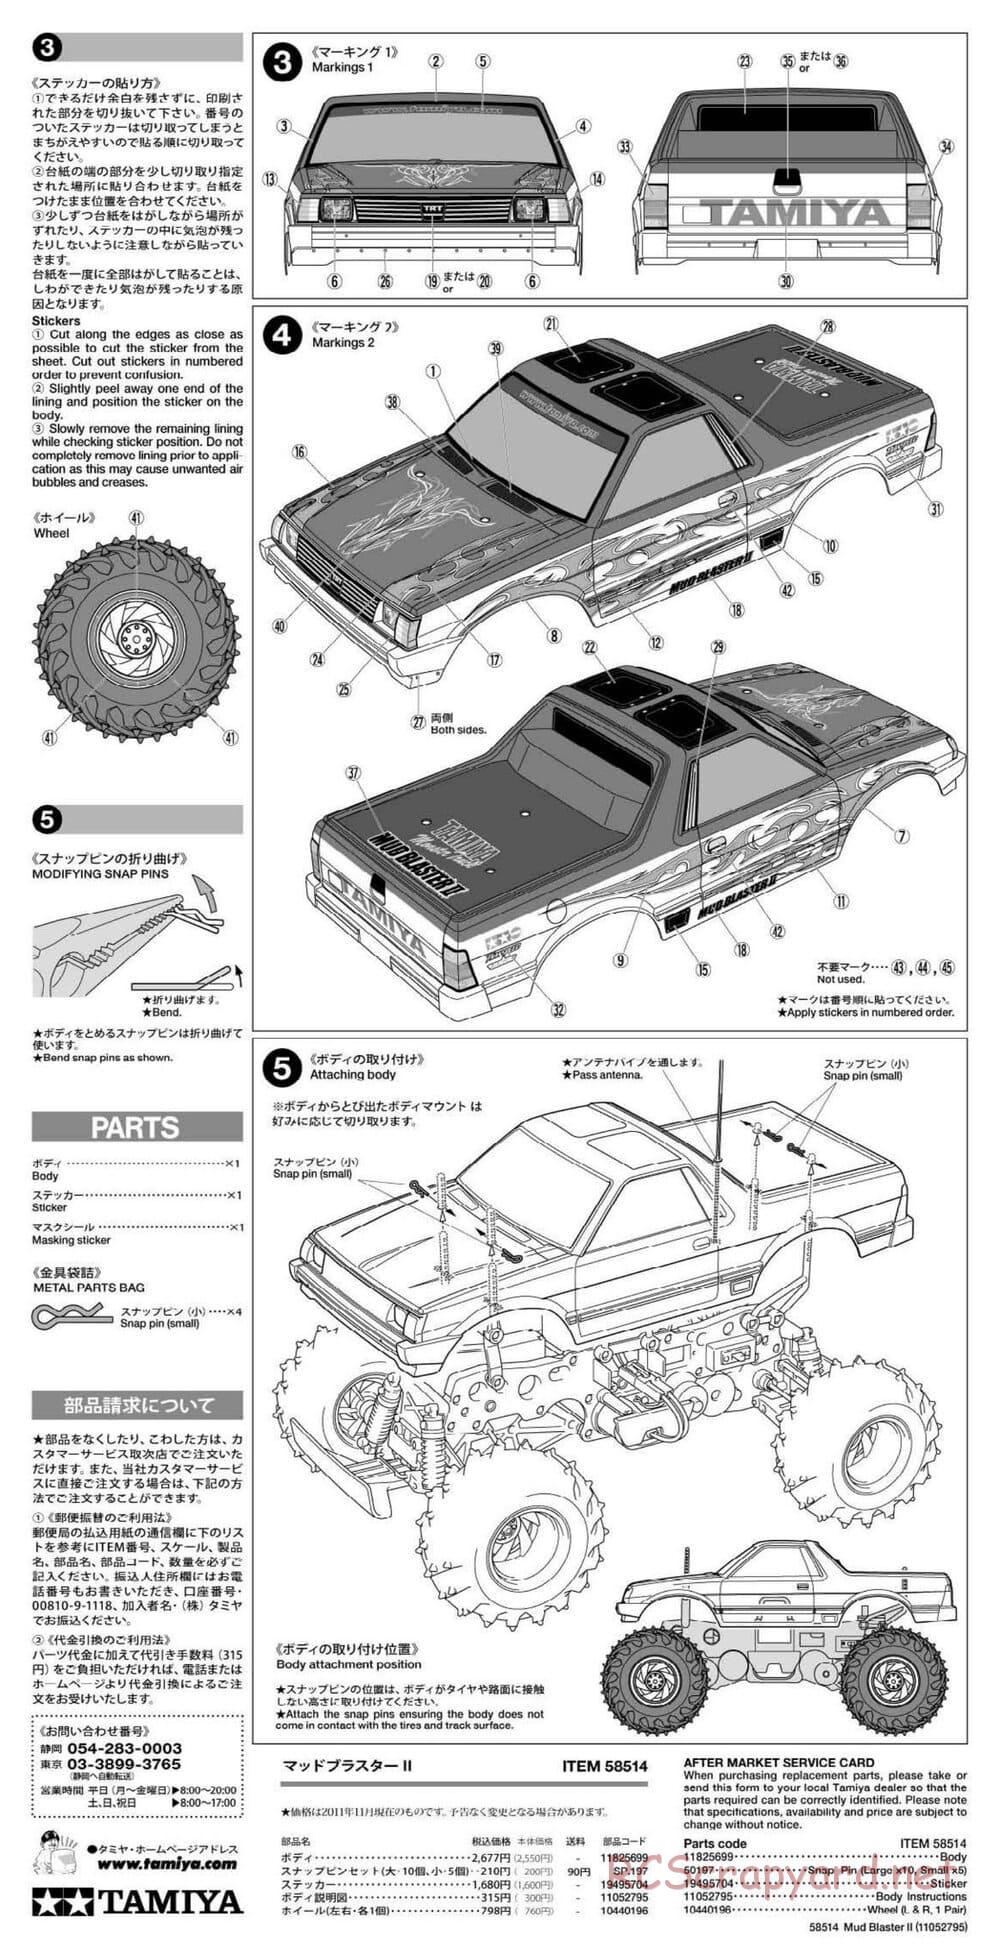 Tamiya - Mud Blaster II - WT-01 Chassis - Manual - Page 22